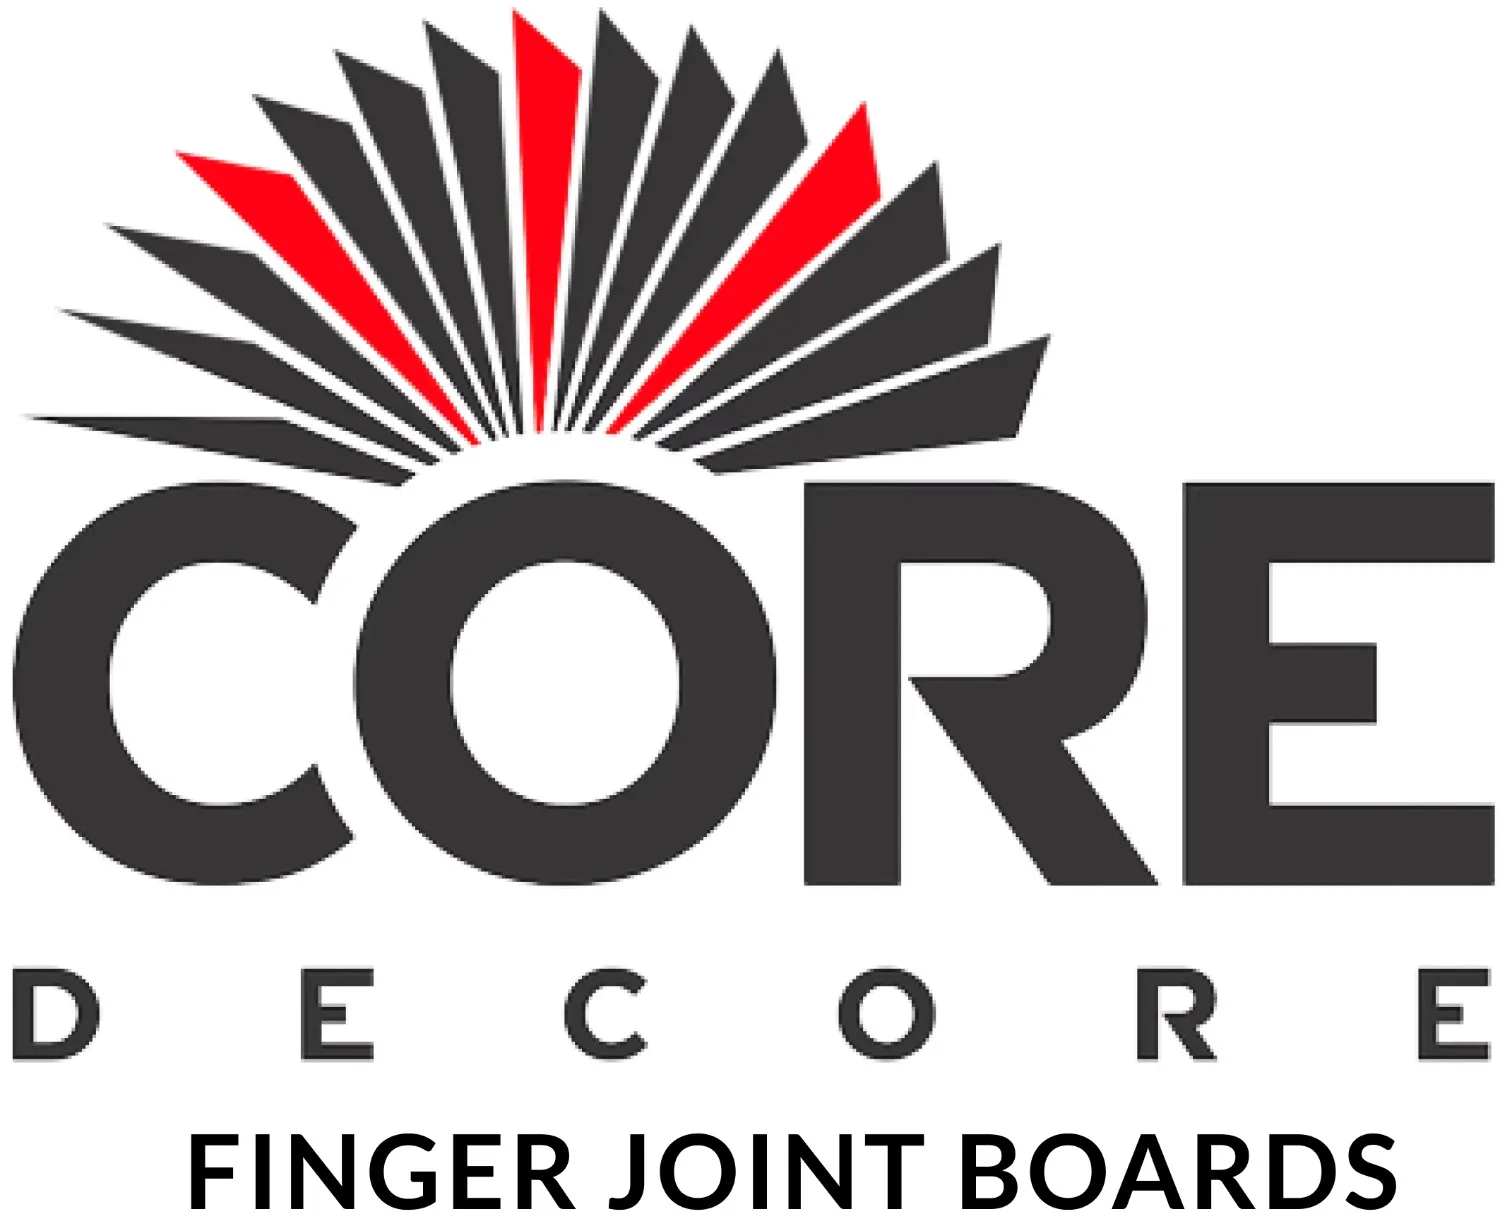 Chopra groups finger joint board logo